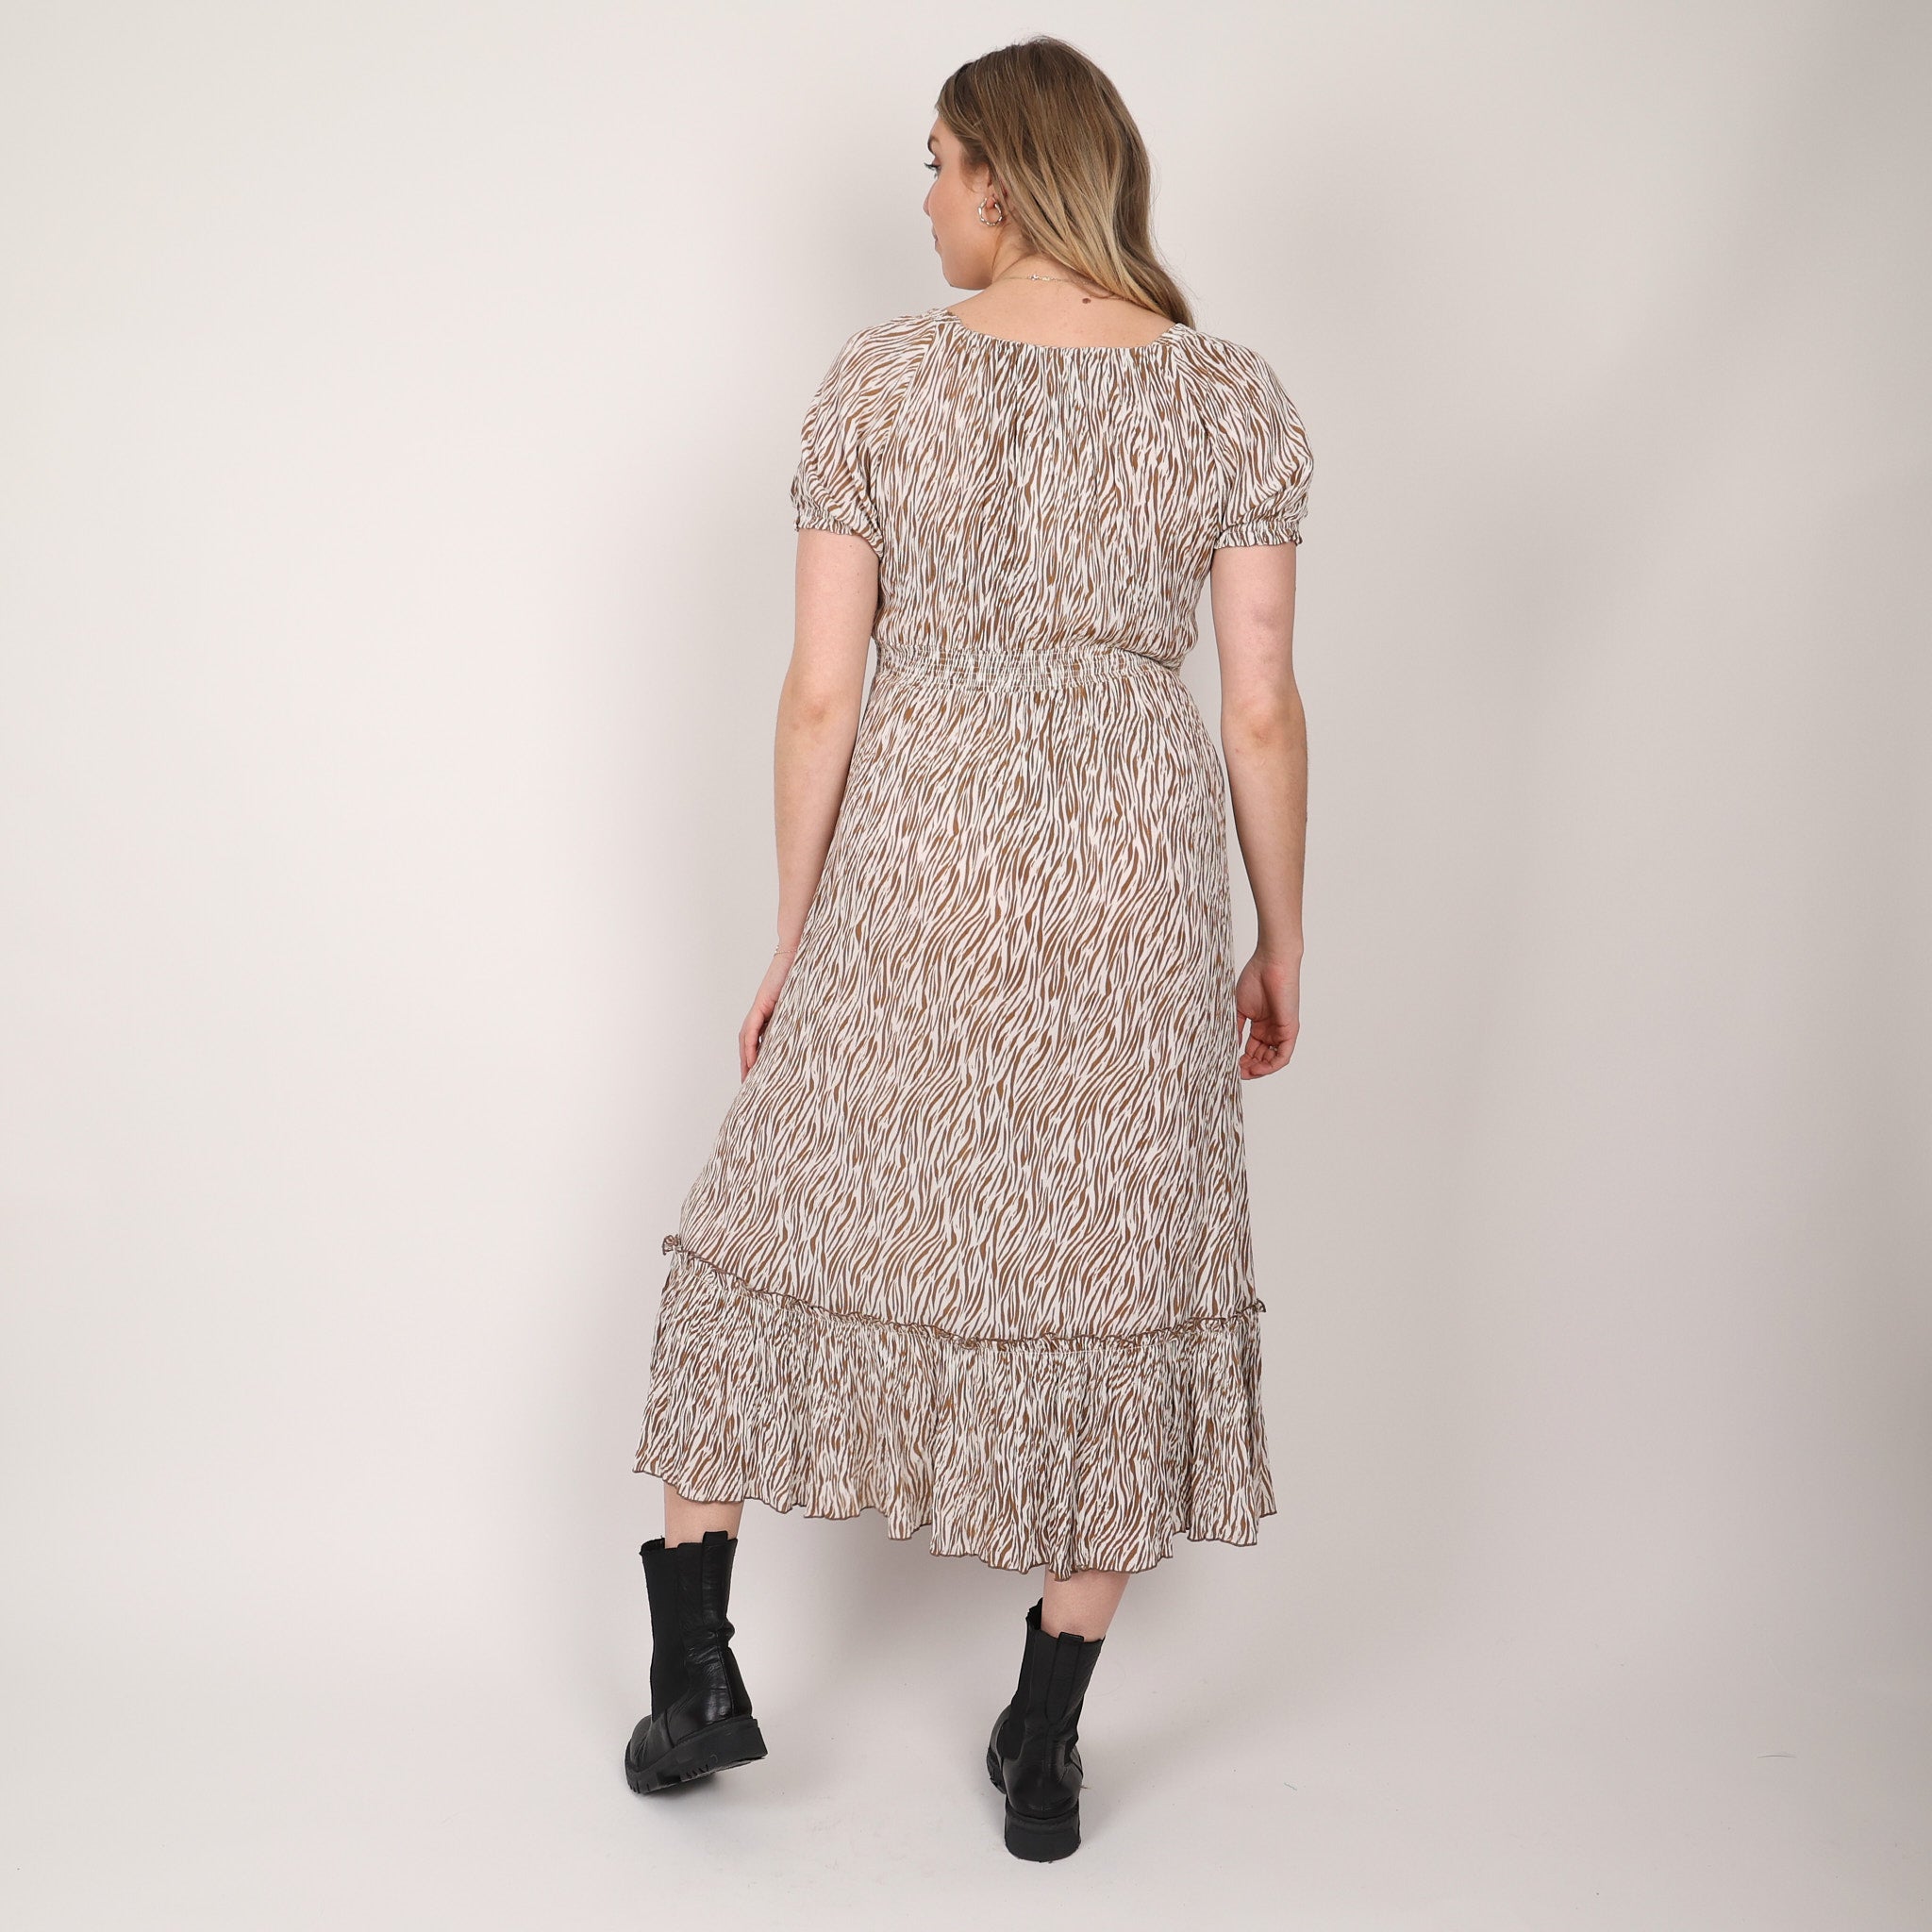 Dress, UK Size 10